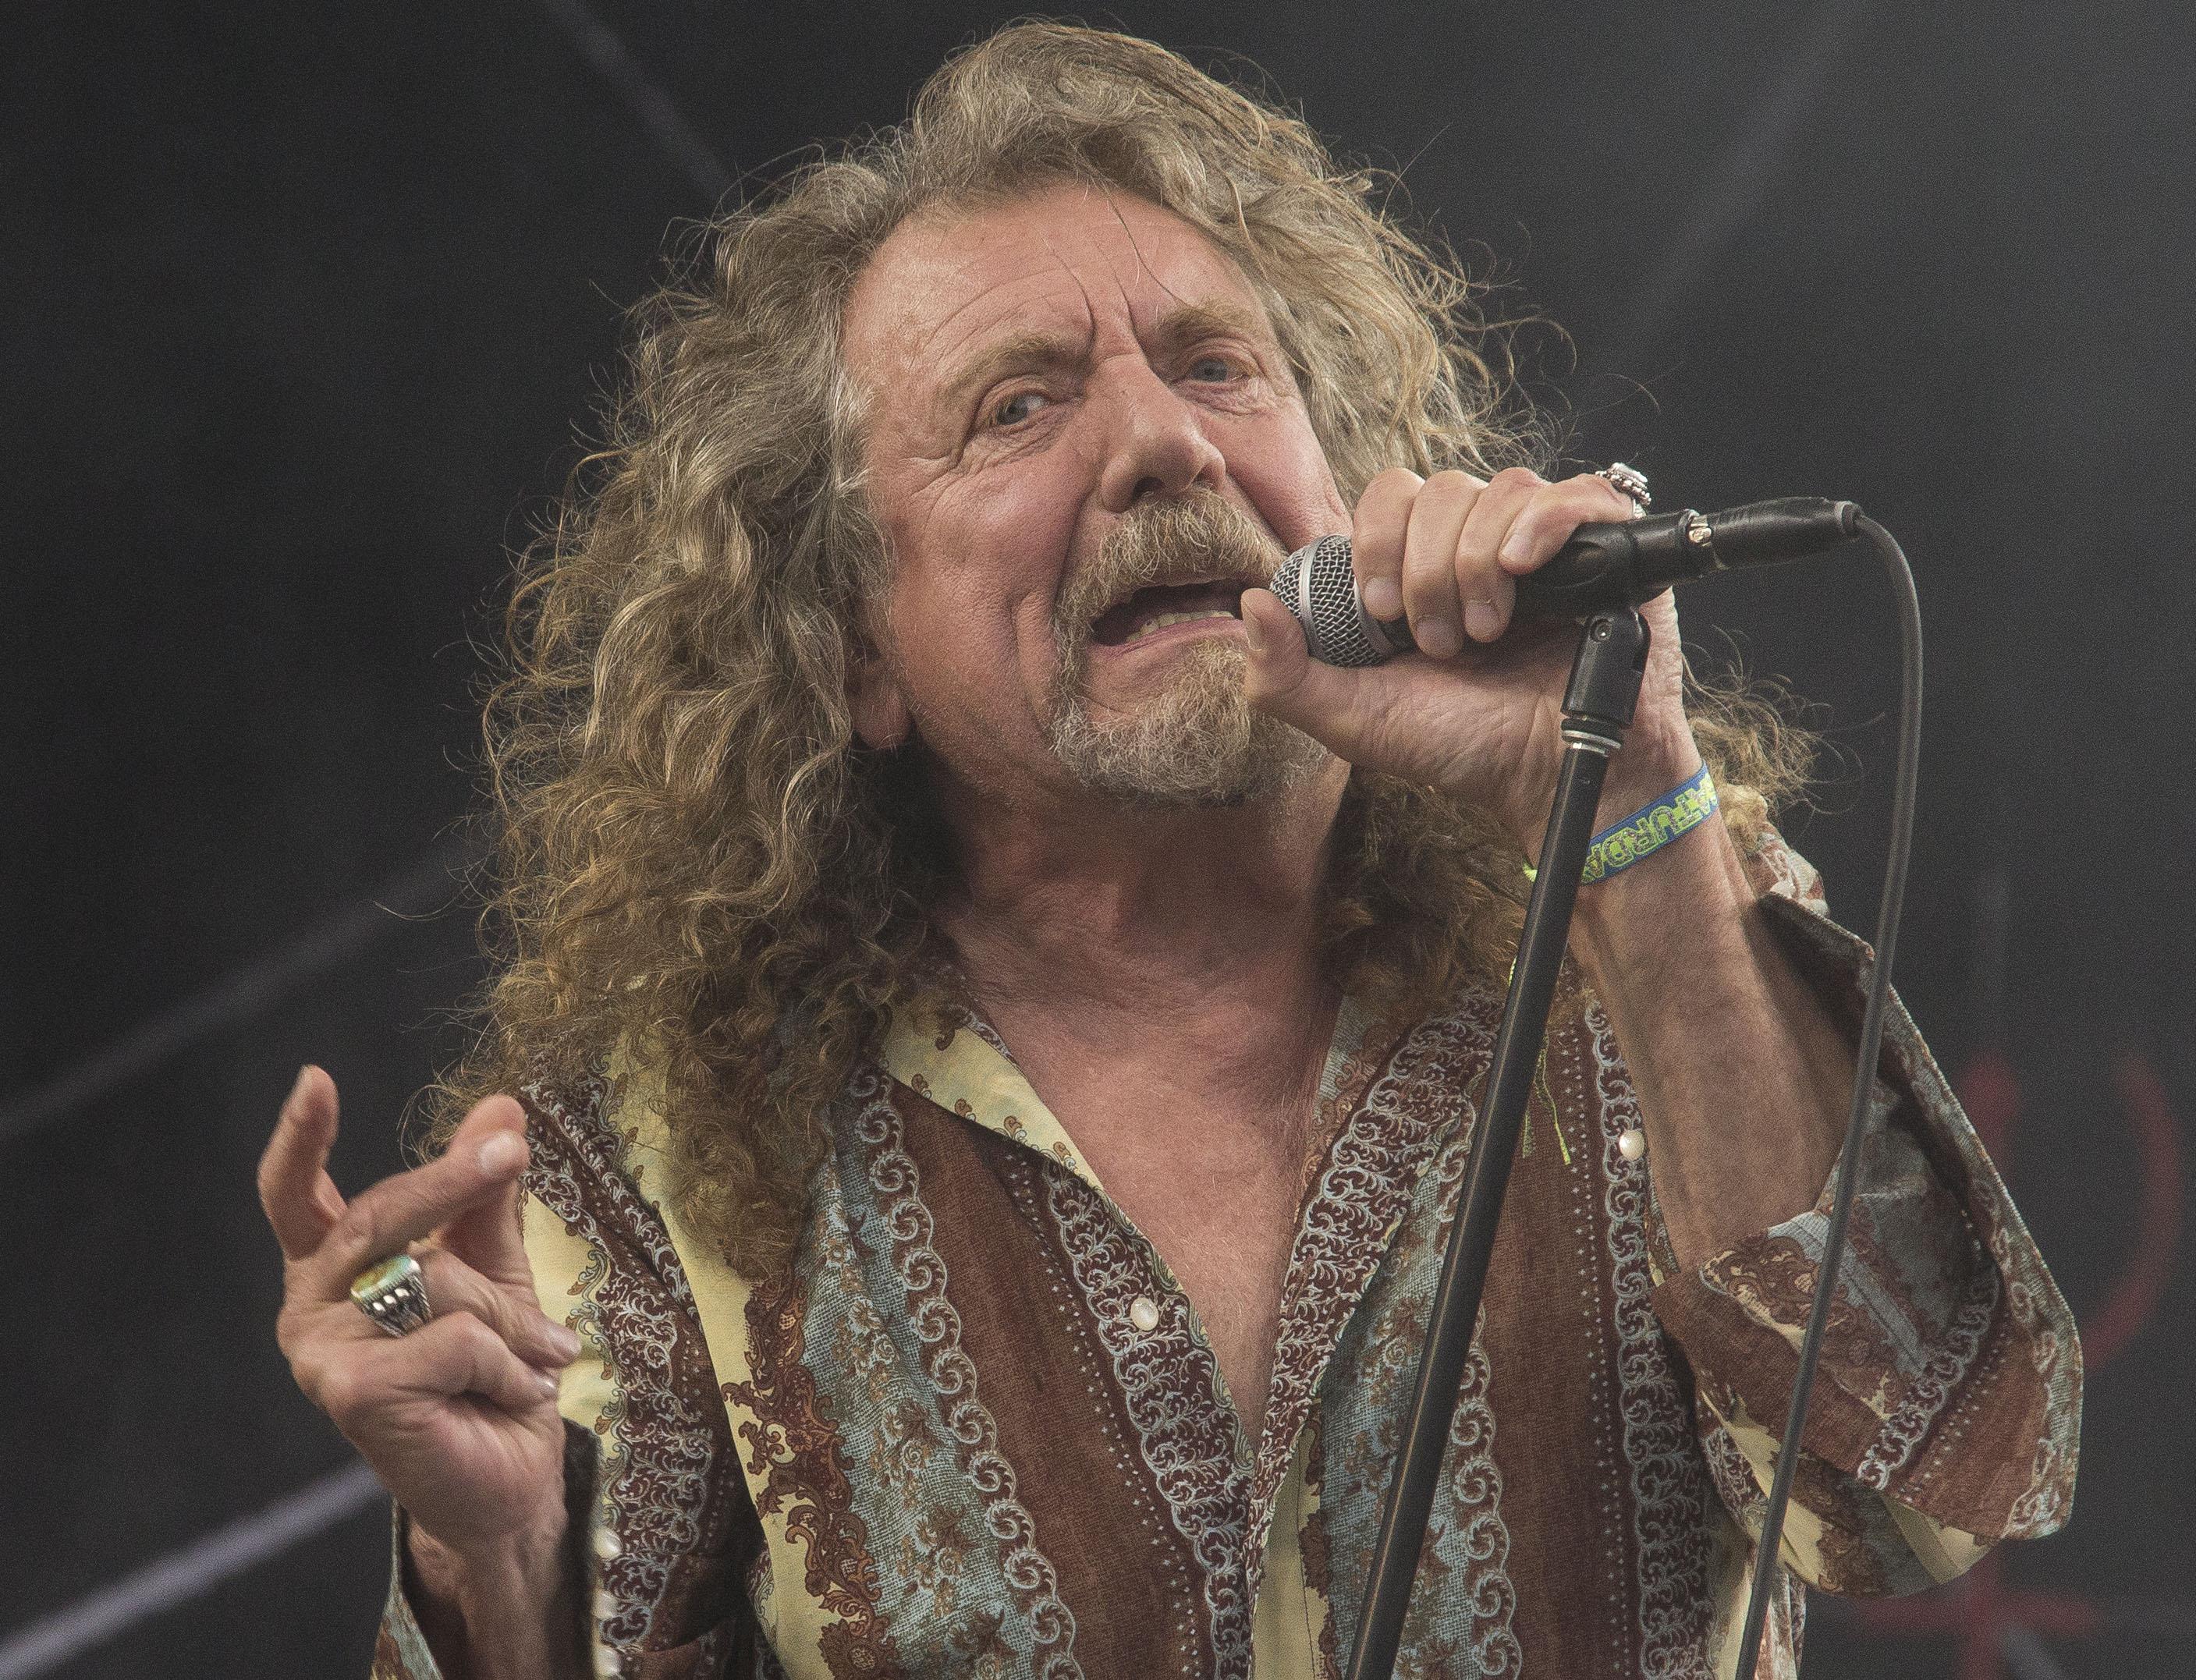 Robert Plant announces Sept. 29 show at the FICA | The Spokesman-Review